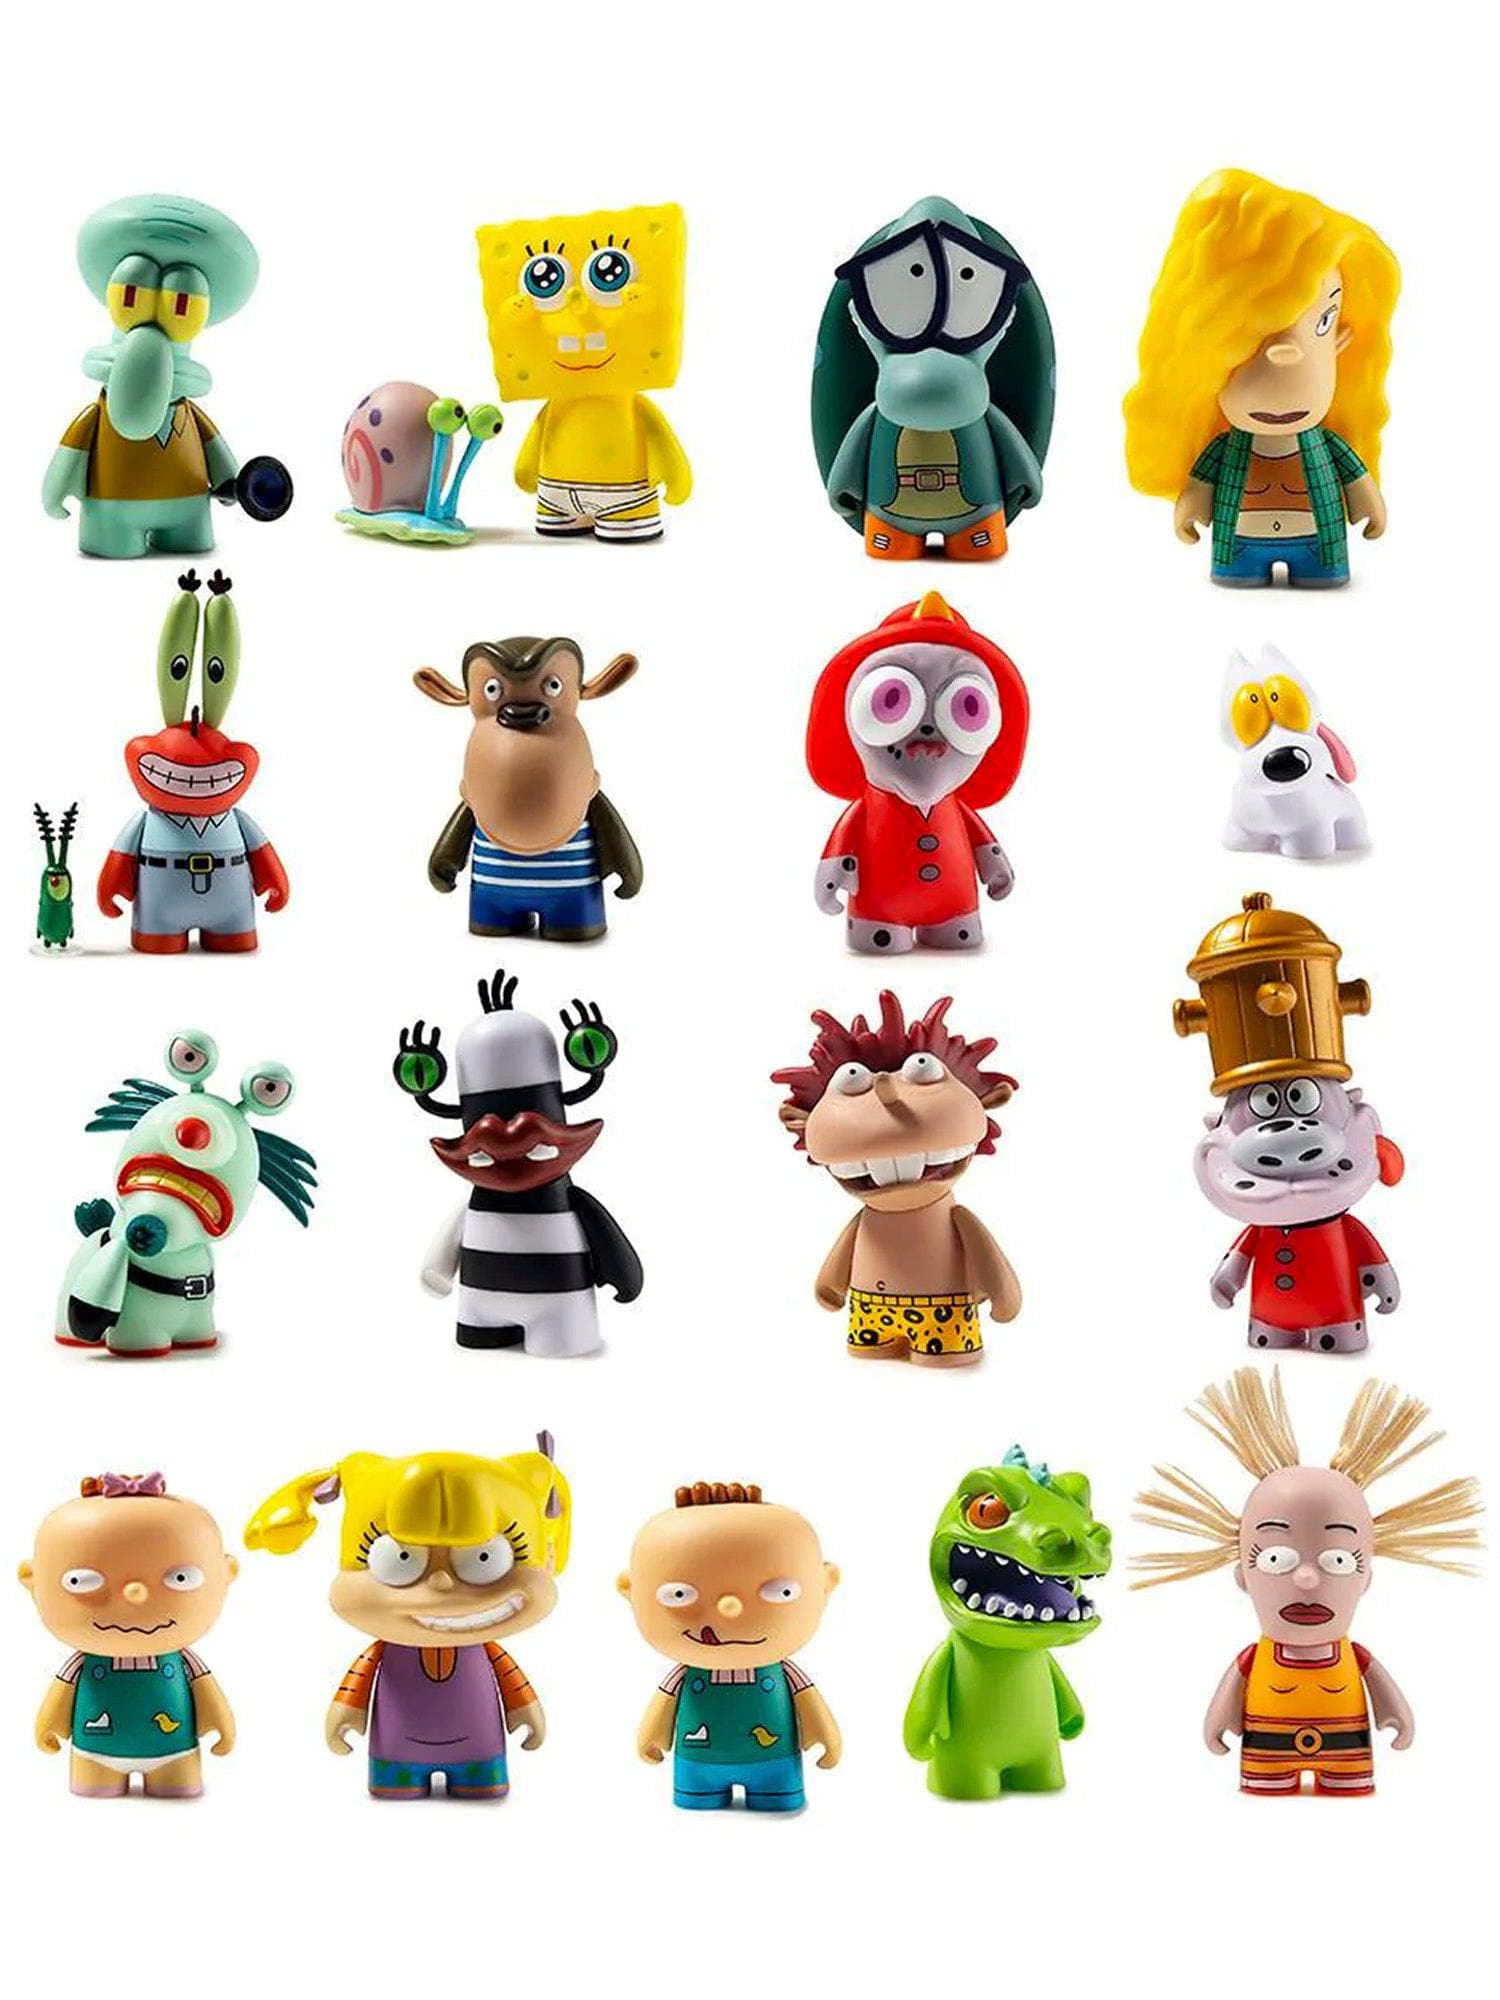 Nickelodeon Nick 90's Mini Figure Series 2 by Kidrobot - costumes.com